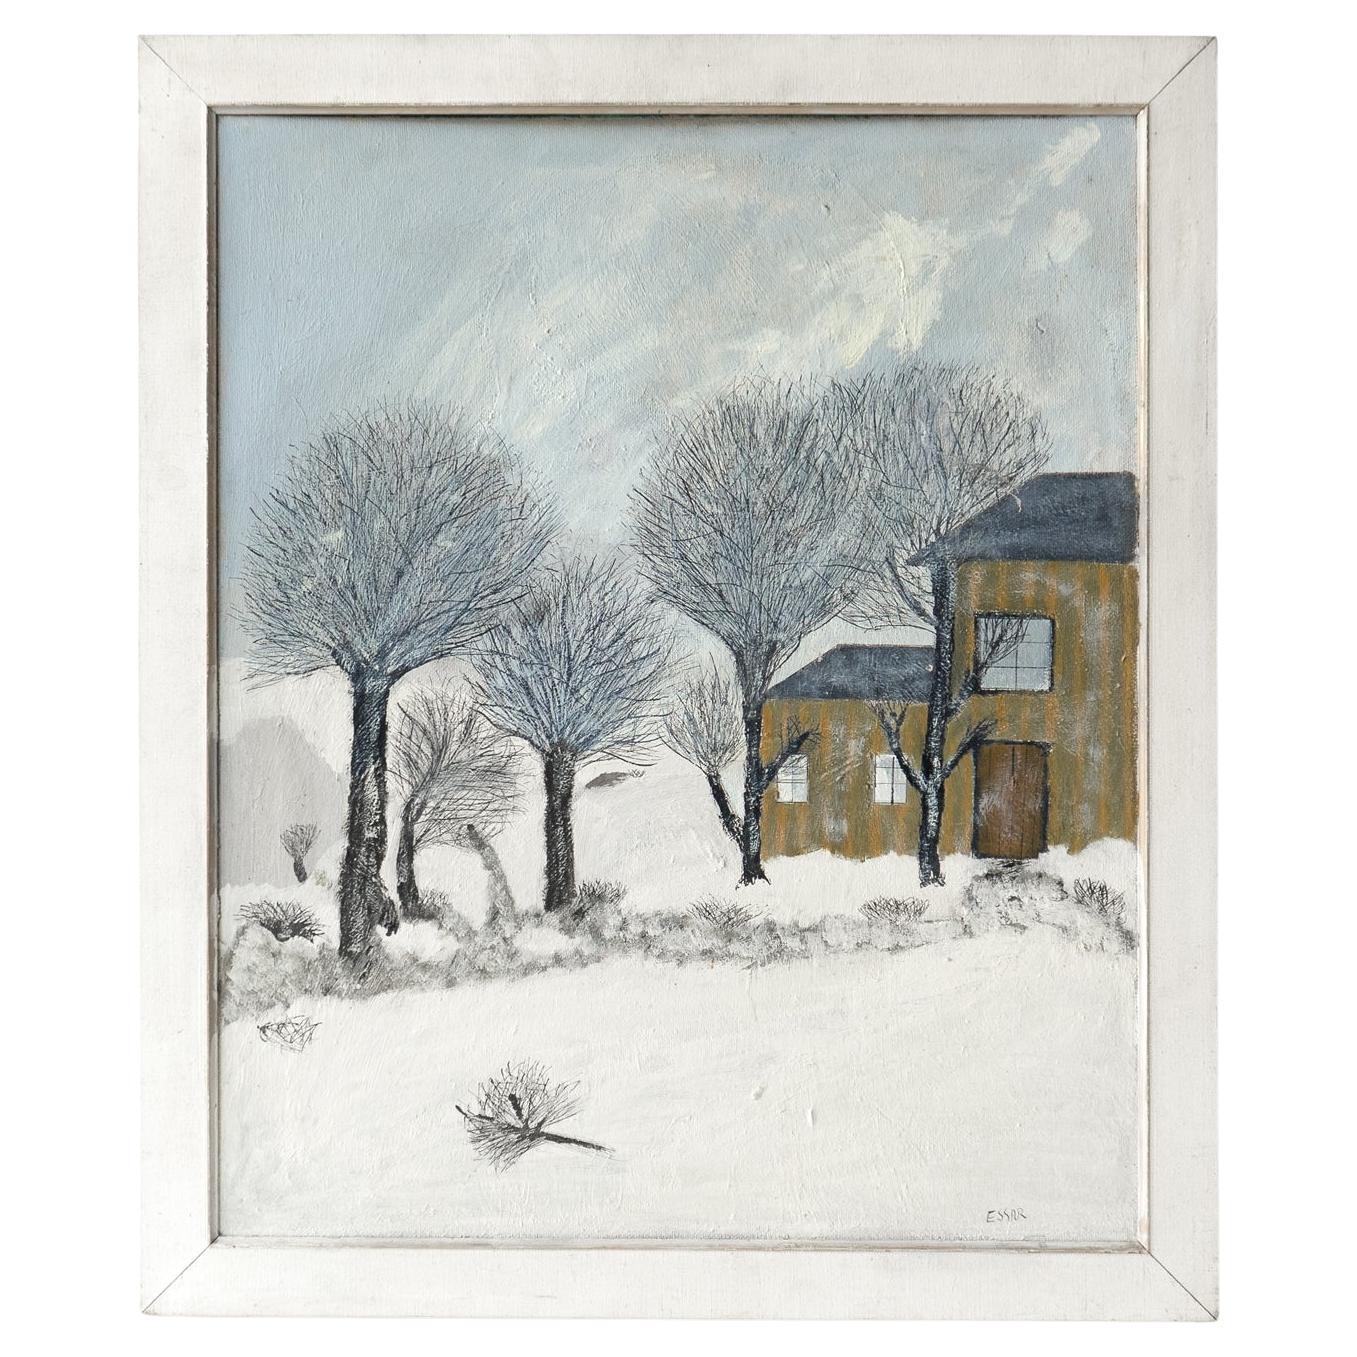 American Naive Folk Art Snowy Winter Landscape, Vintage Original Oil Painting